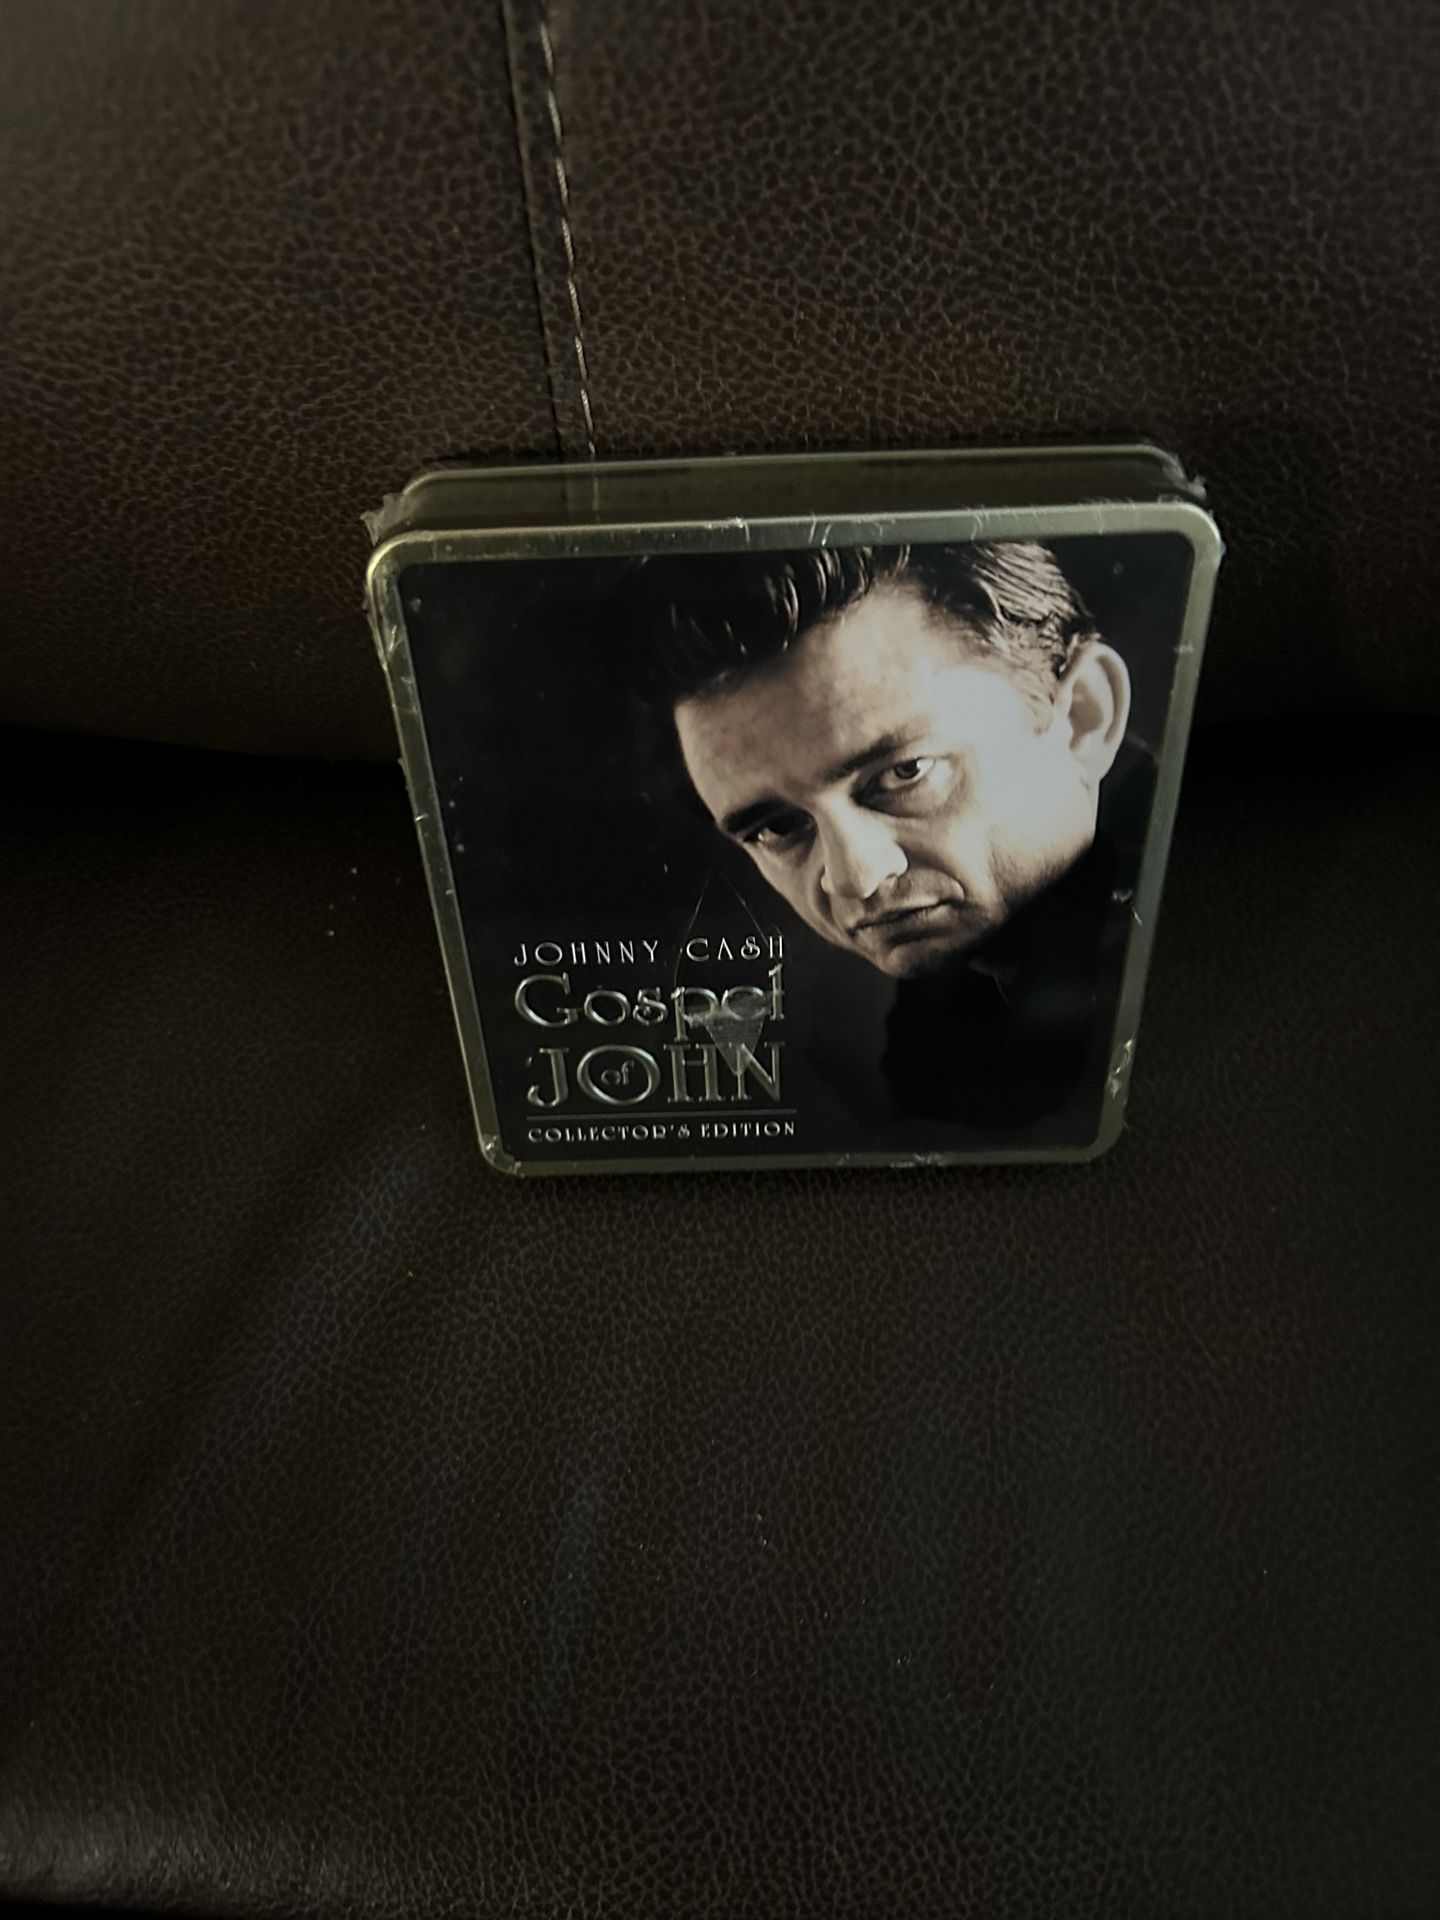 New Two CD’s Johnny Cash, gospel of John collectors edition